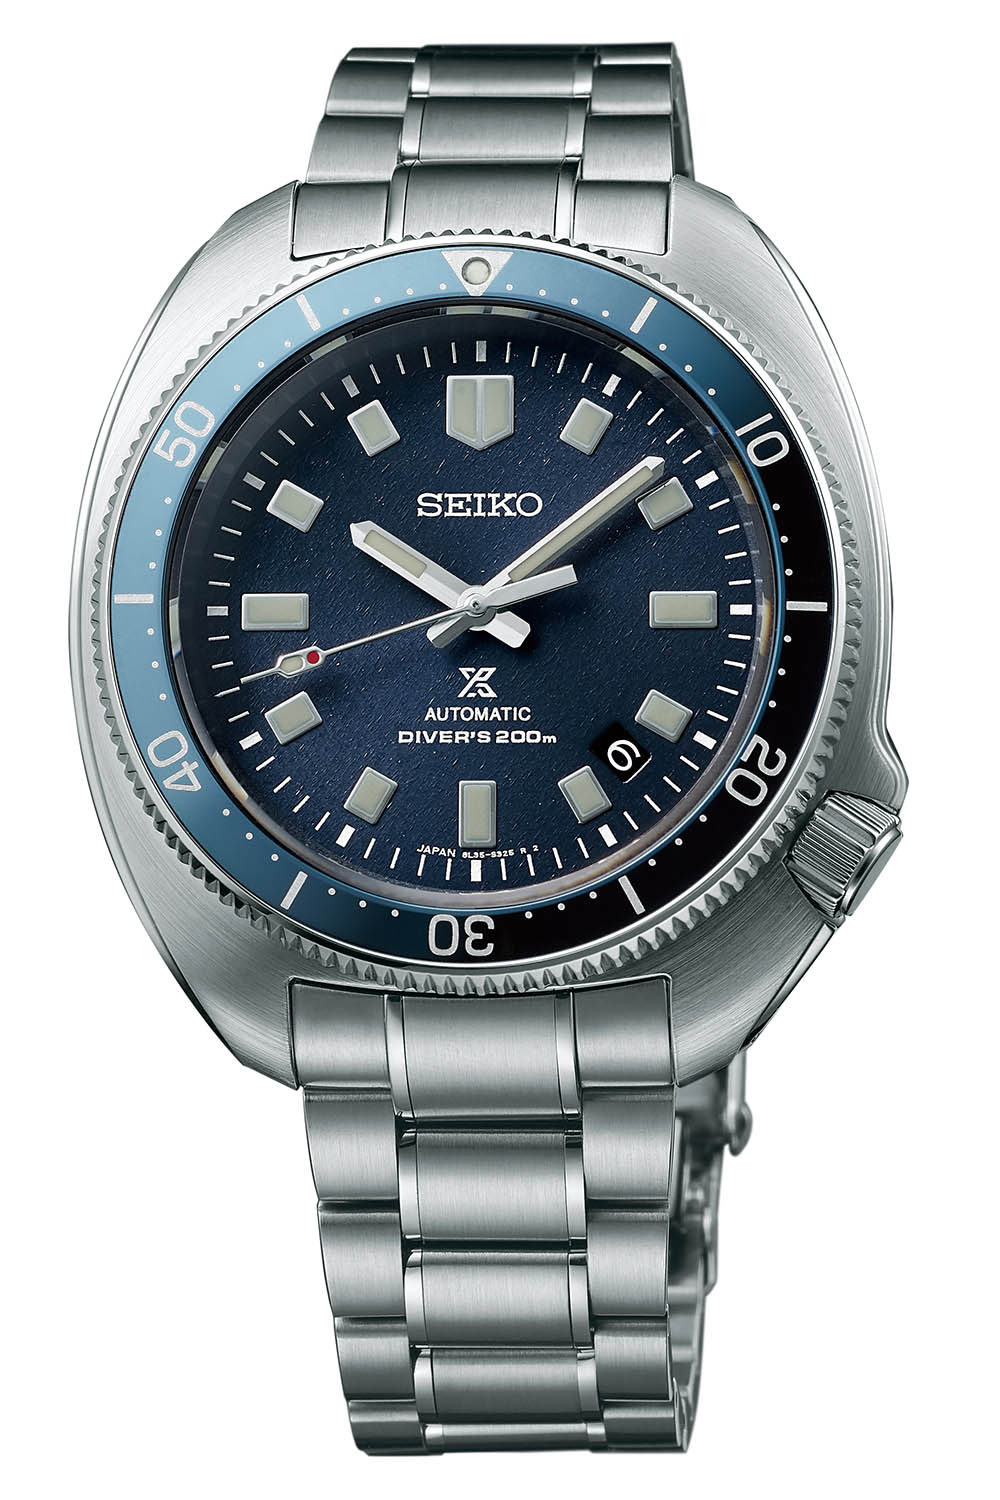 Introducing The Seiko Prospex SLA049 & SLA051 Dive Watches